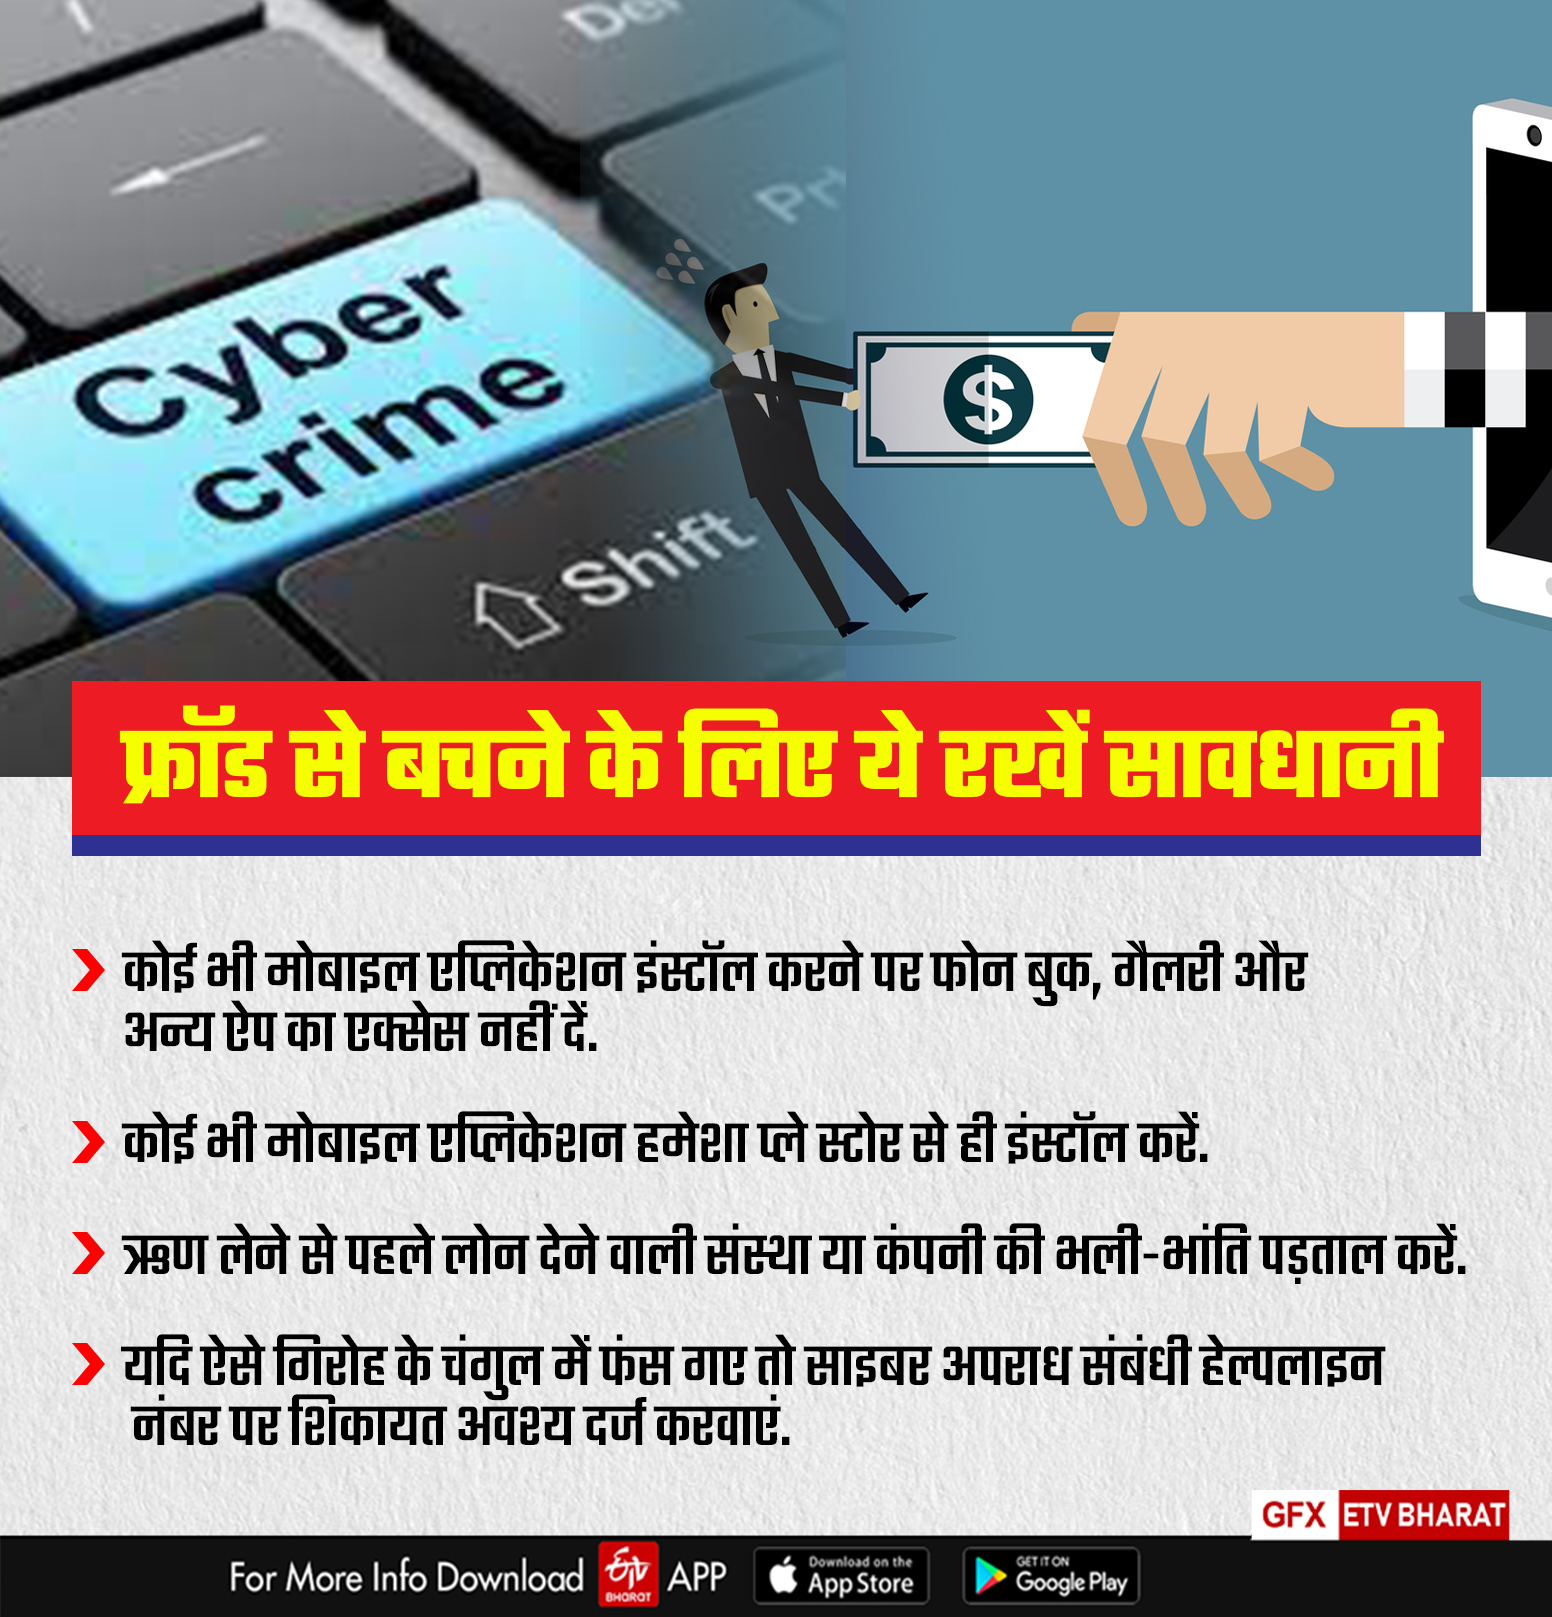 Cyber Fraud in Rajasthan